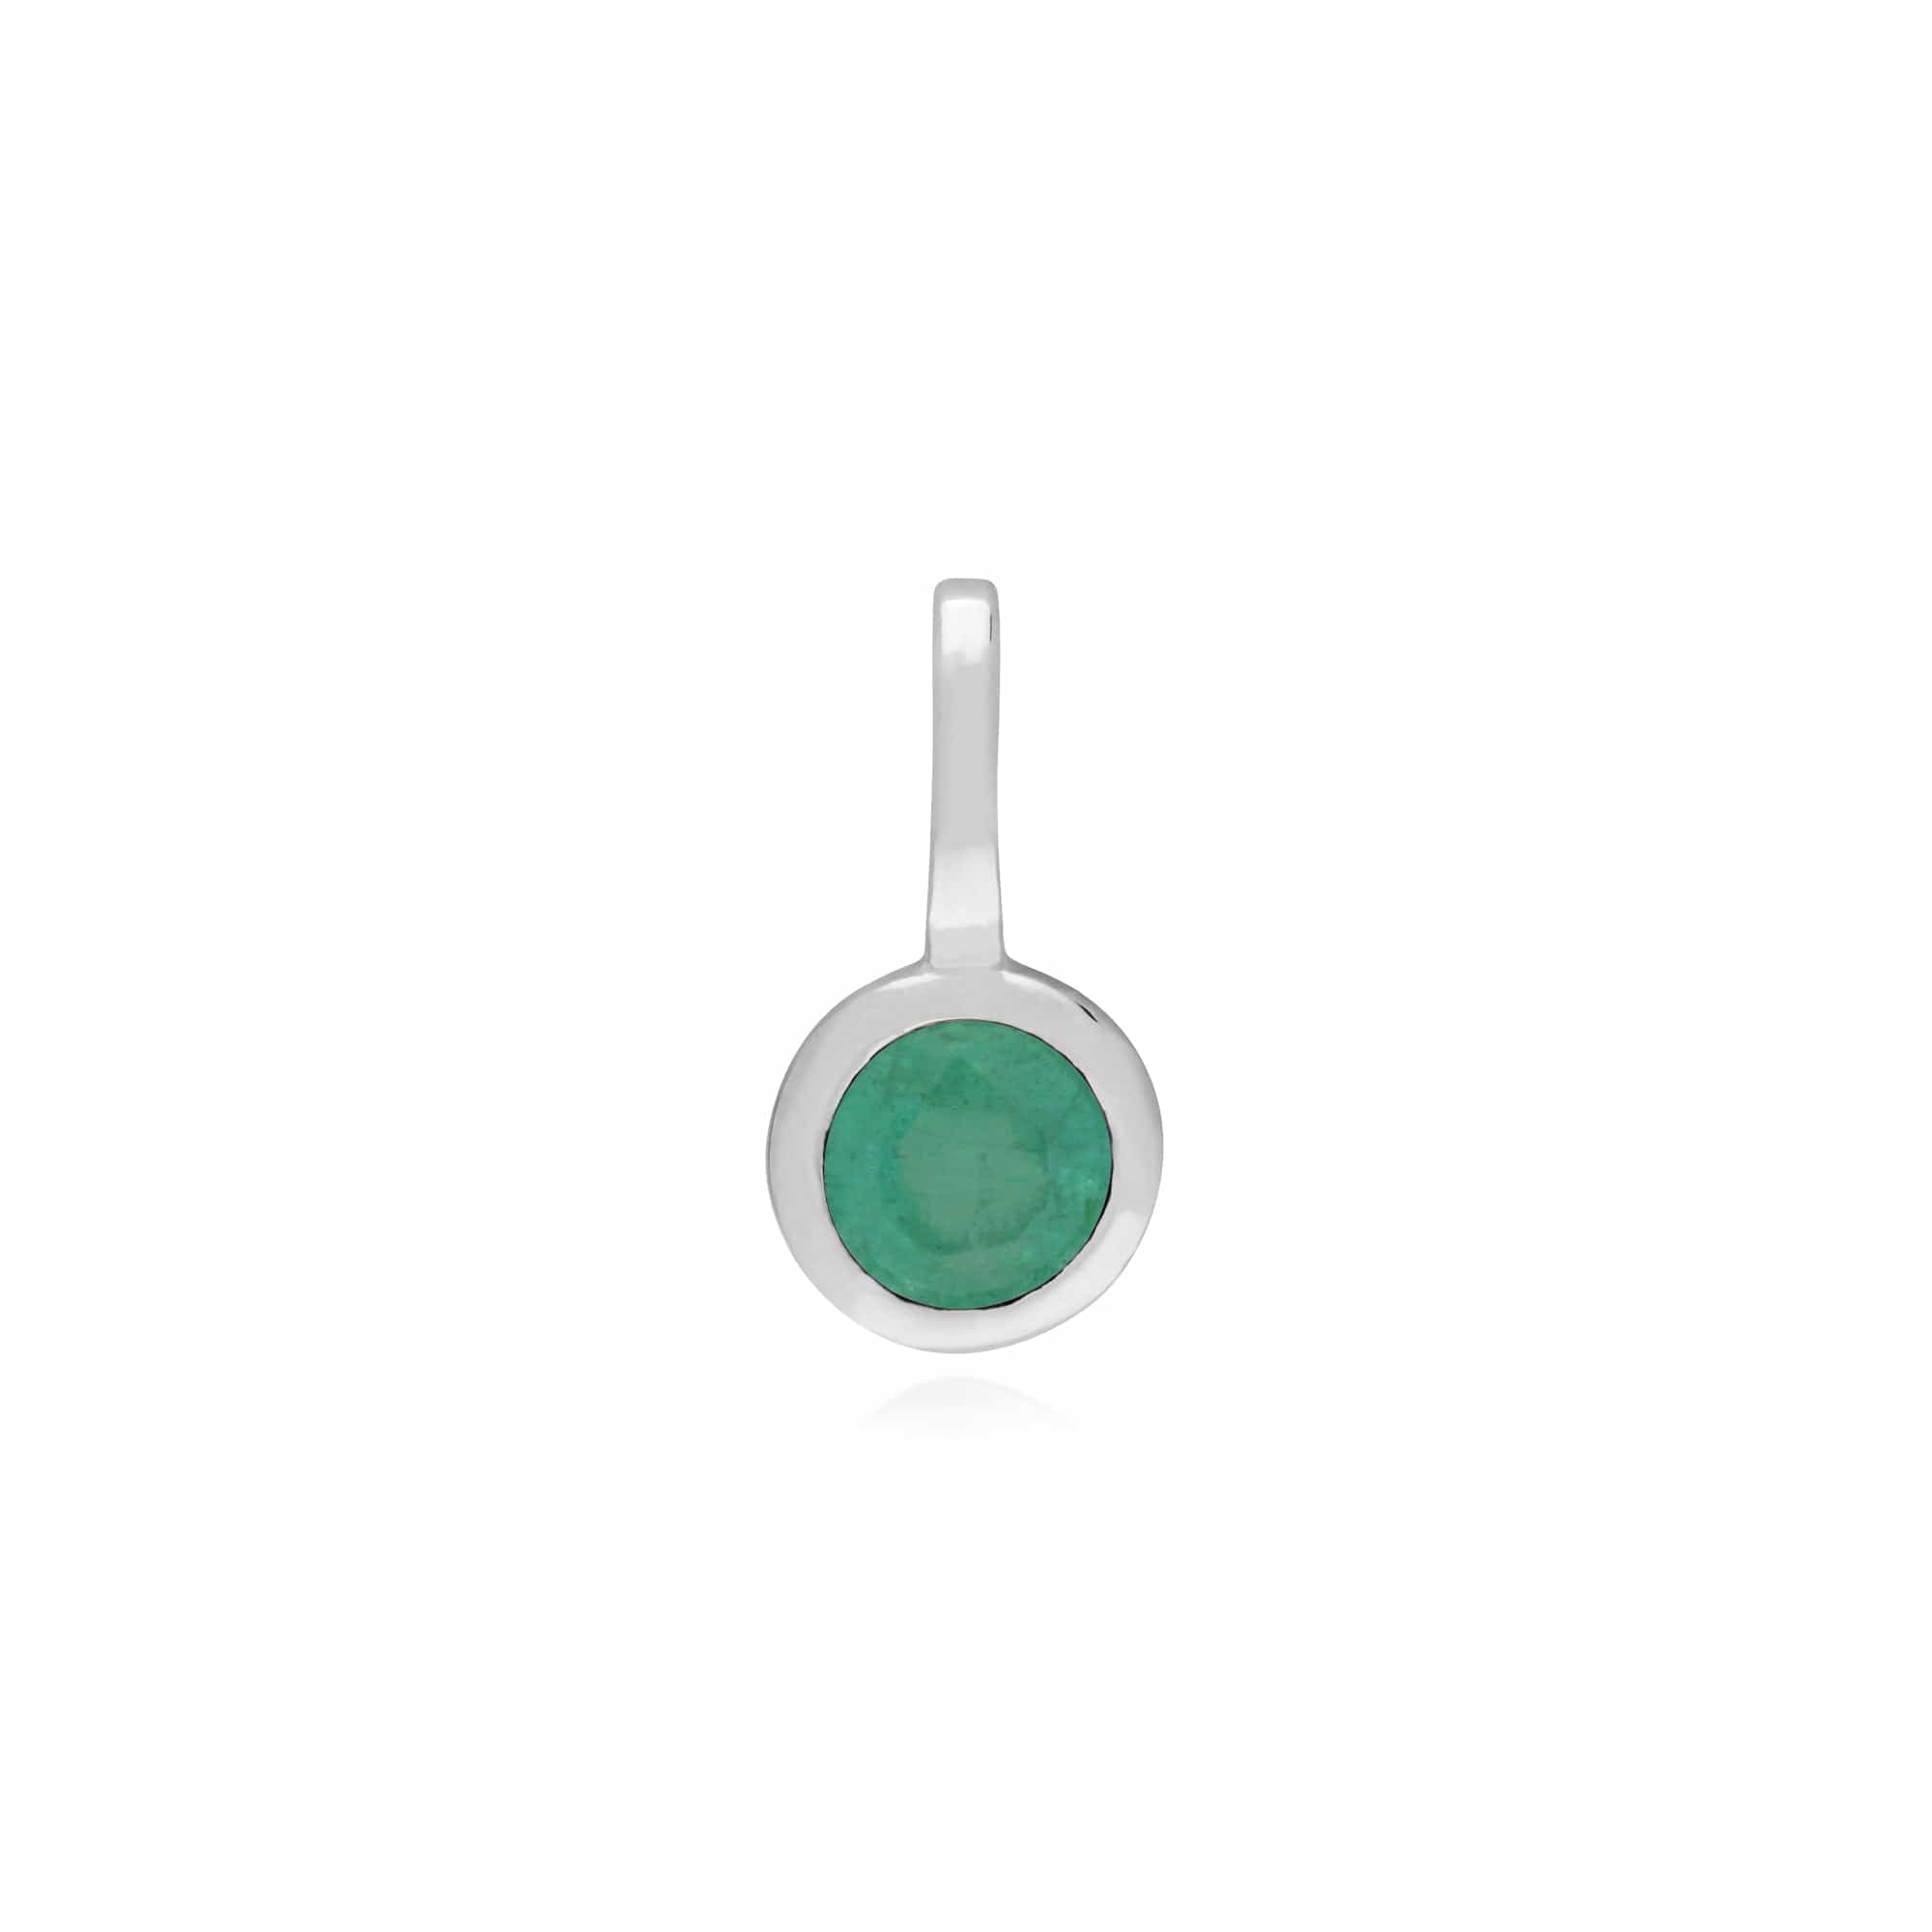 270P027602925-270P027001925 Classic Heart Lock Pendant & Emerald Charm in 925 Sterling Silver 2